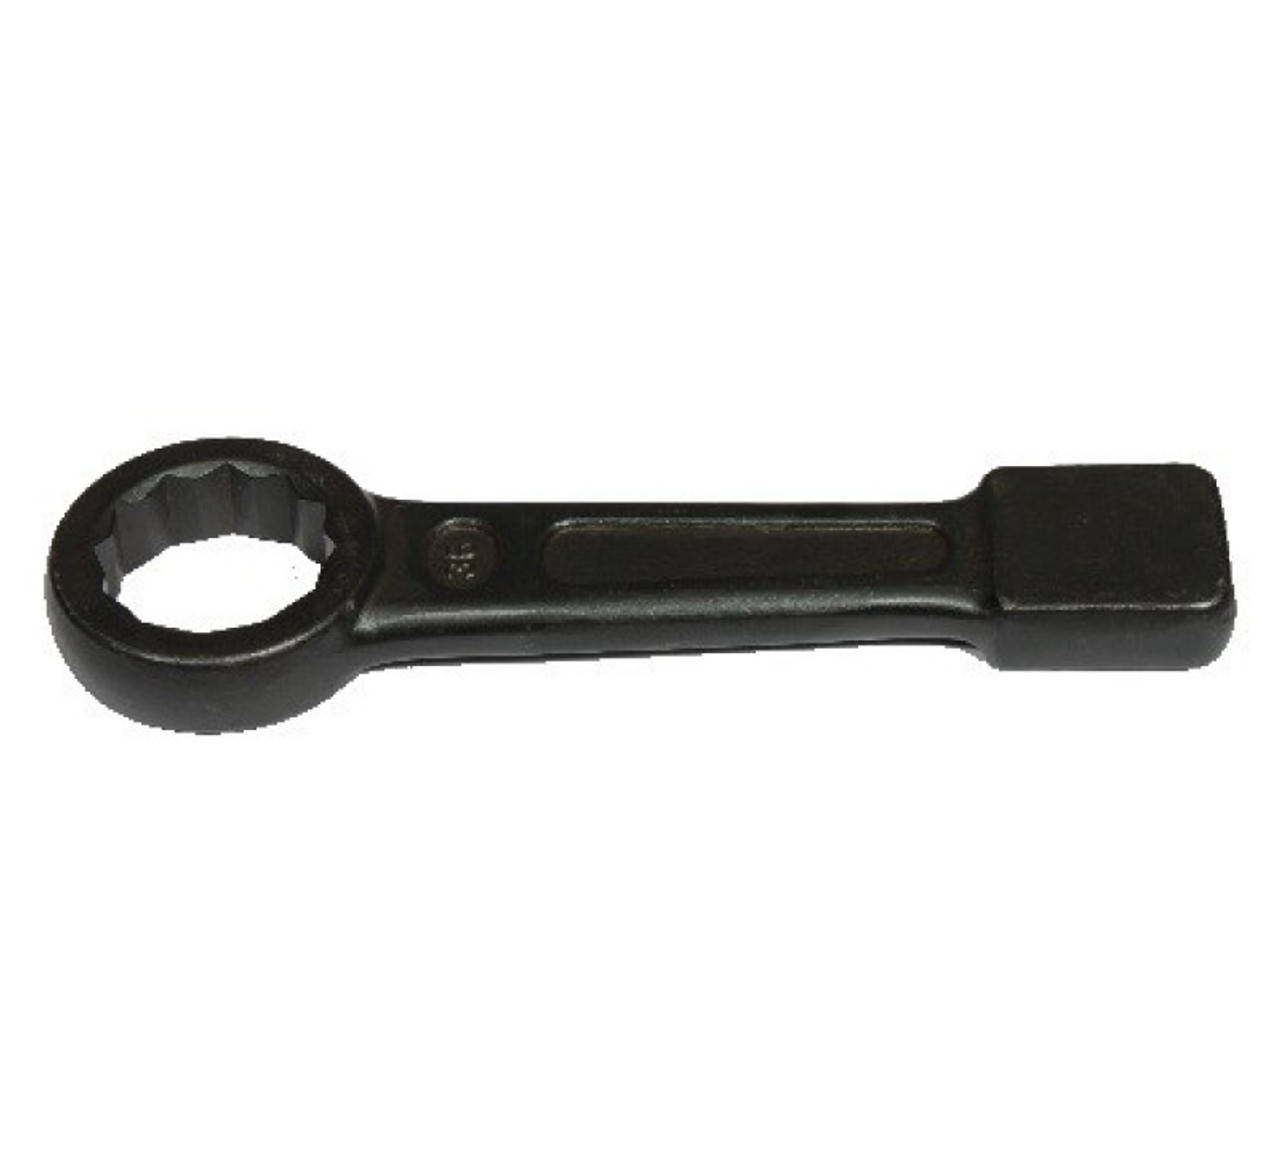 IMPA 611148 Striking wrench single open end 54 mm